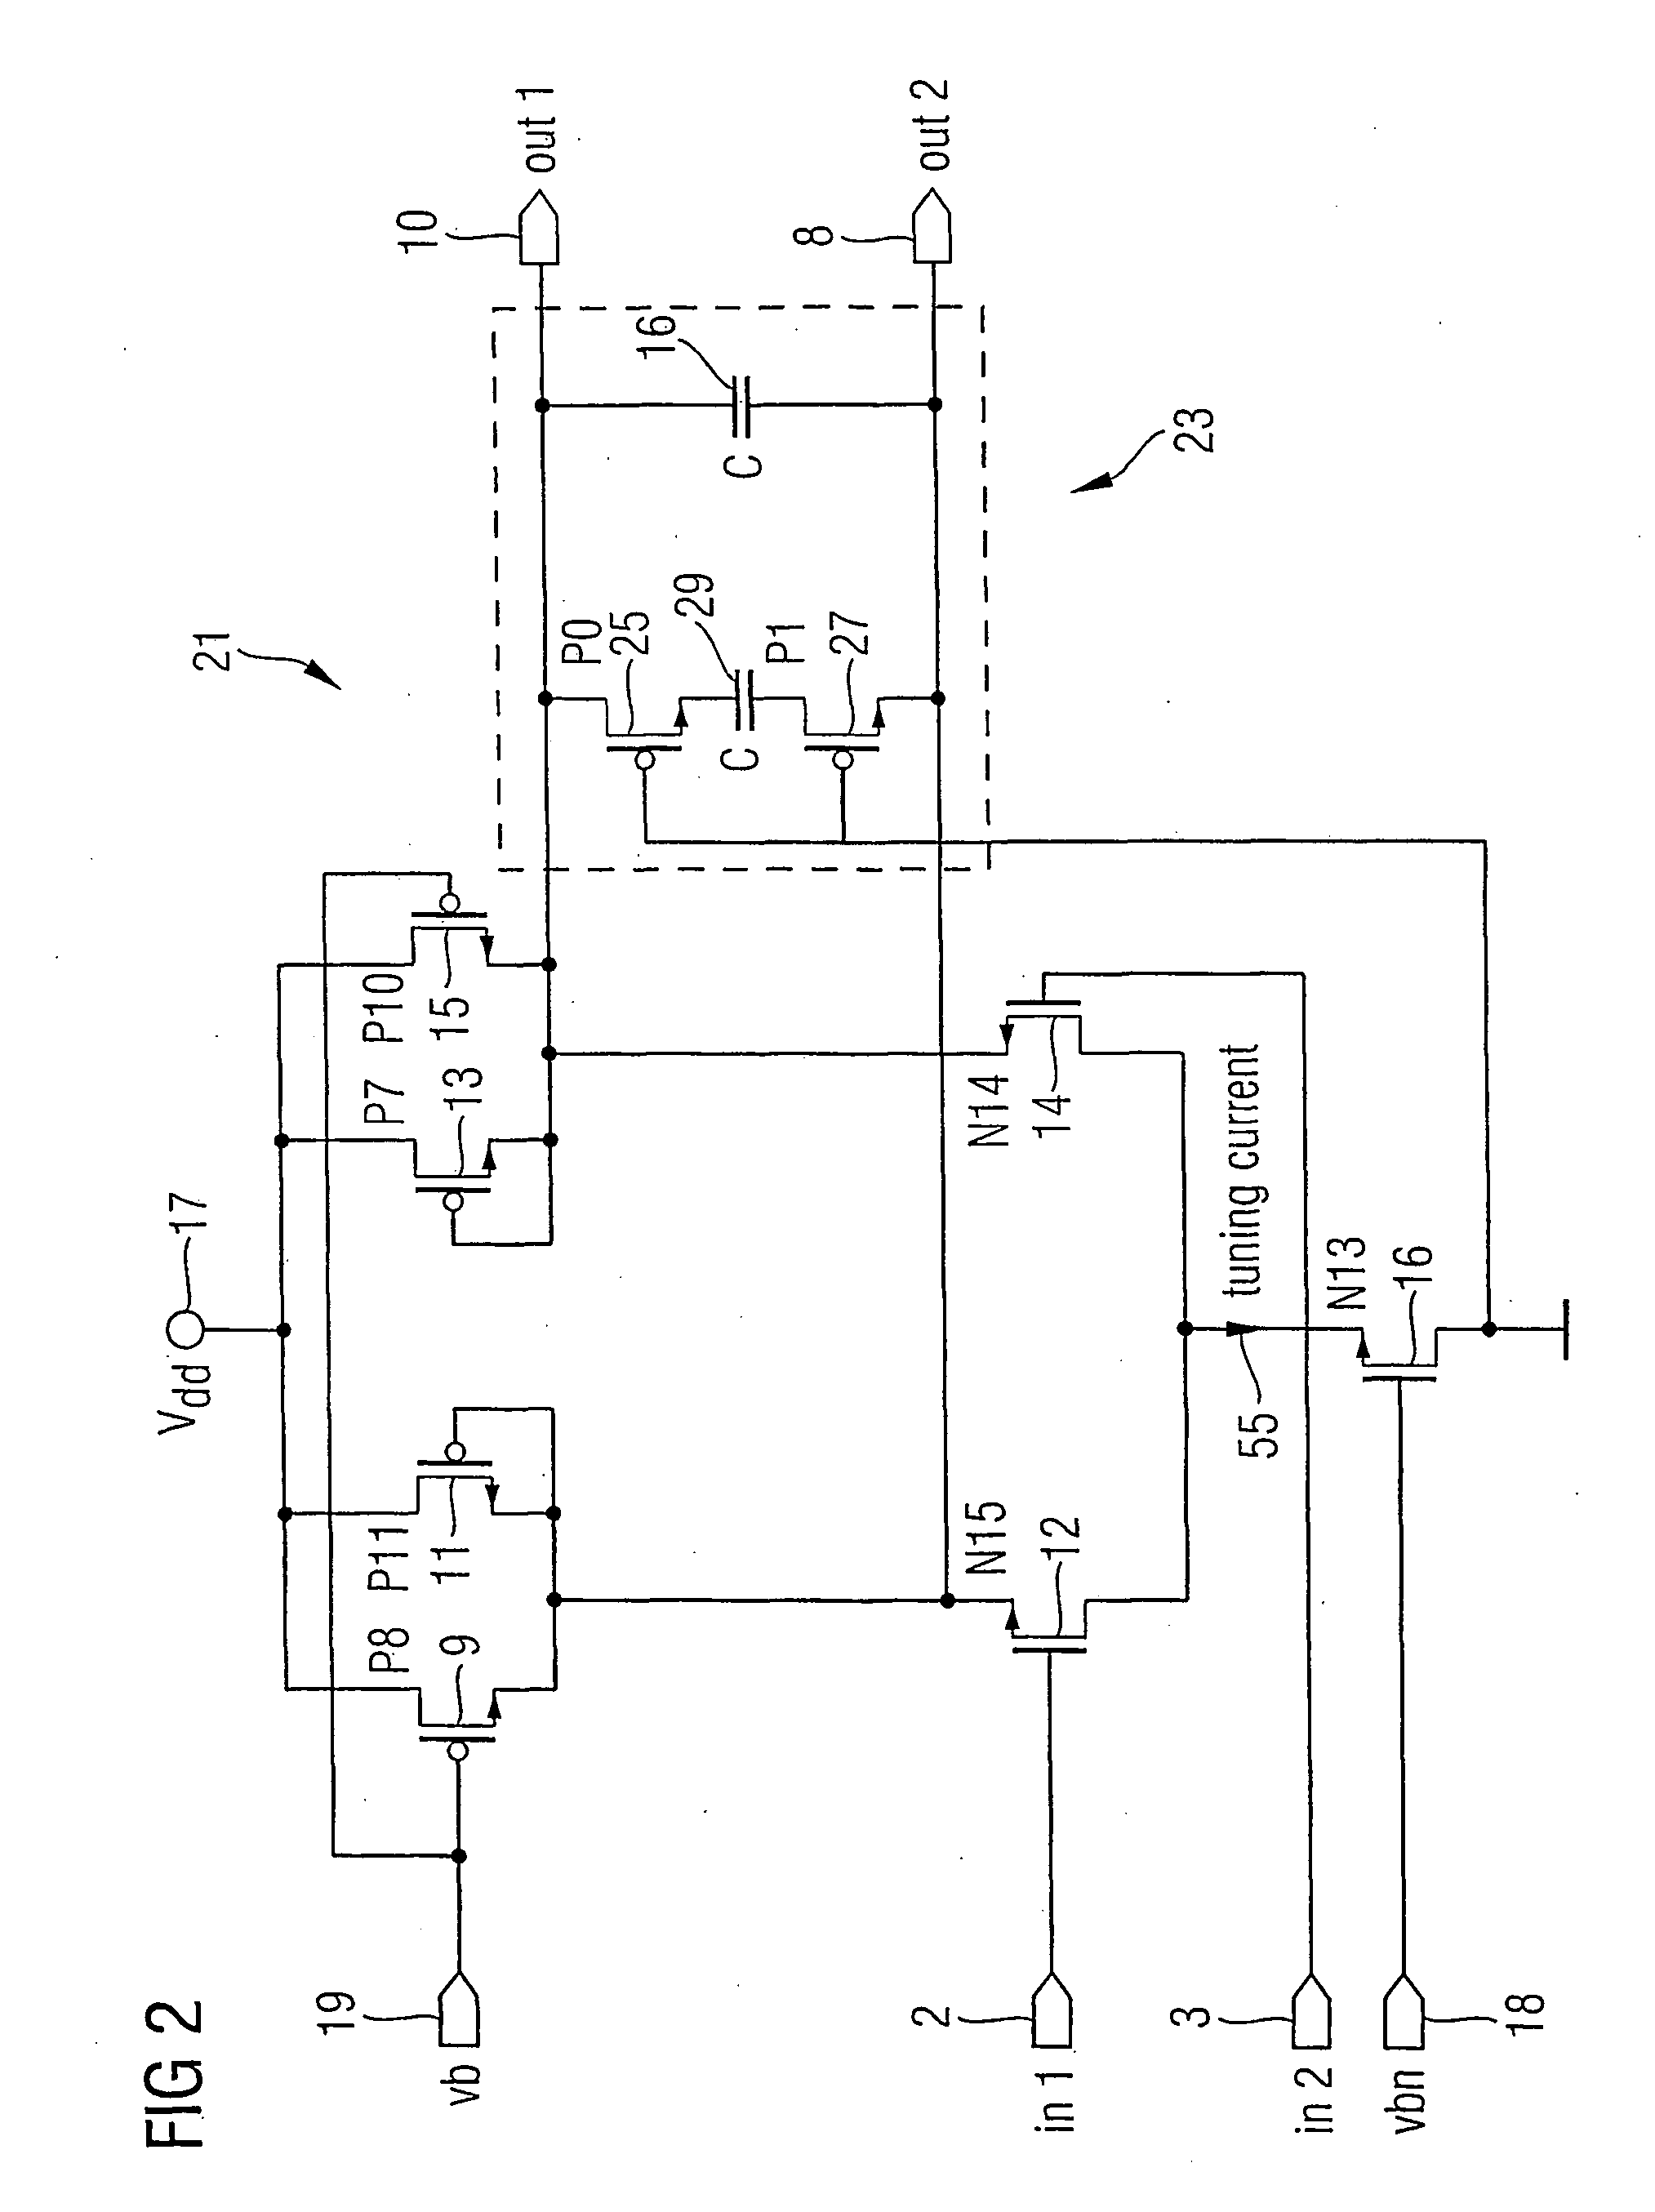 Current-controlled oscillator